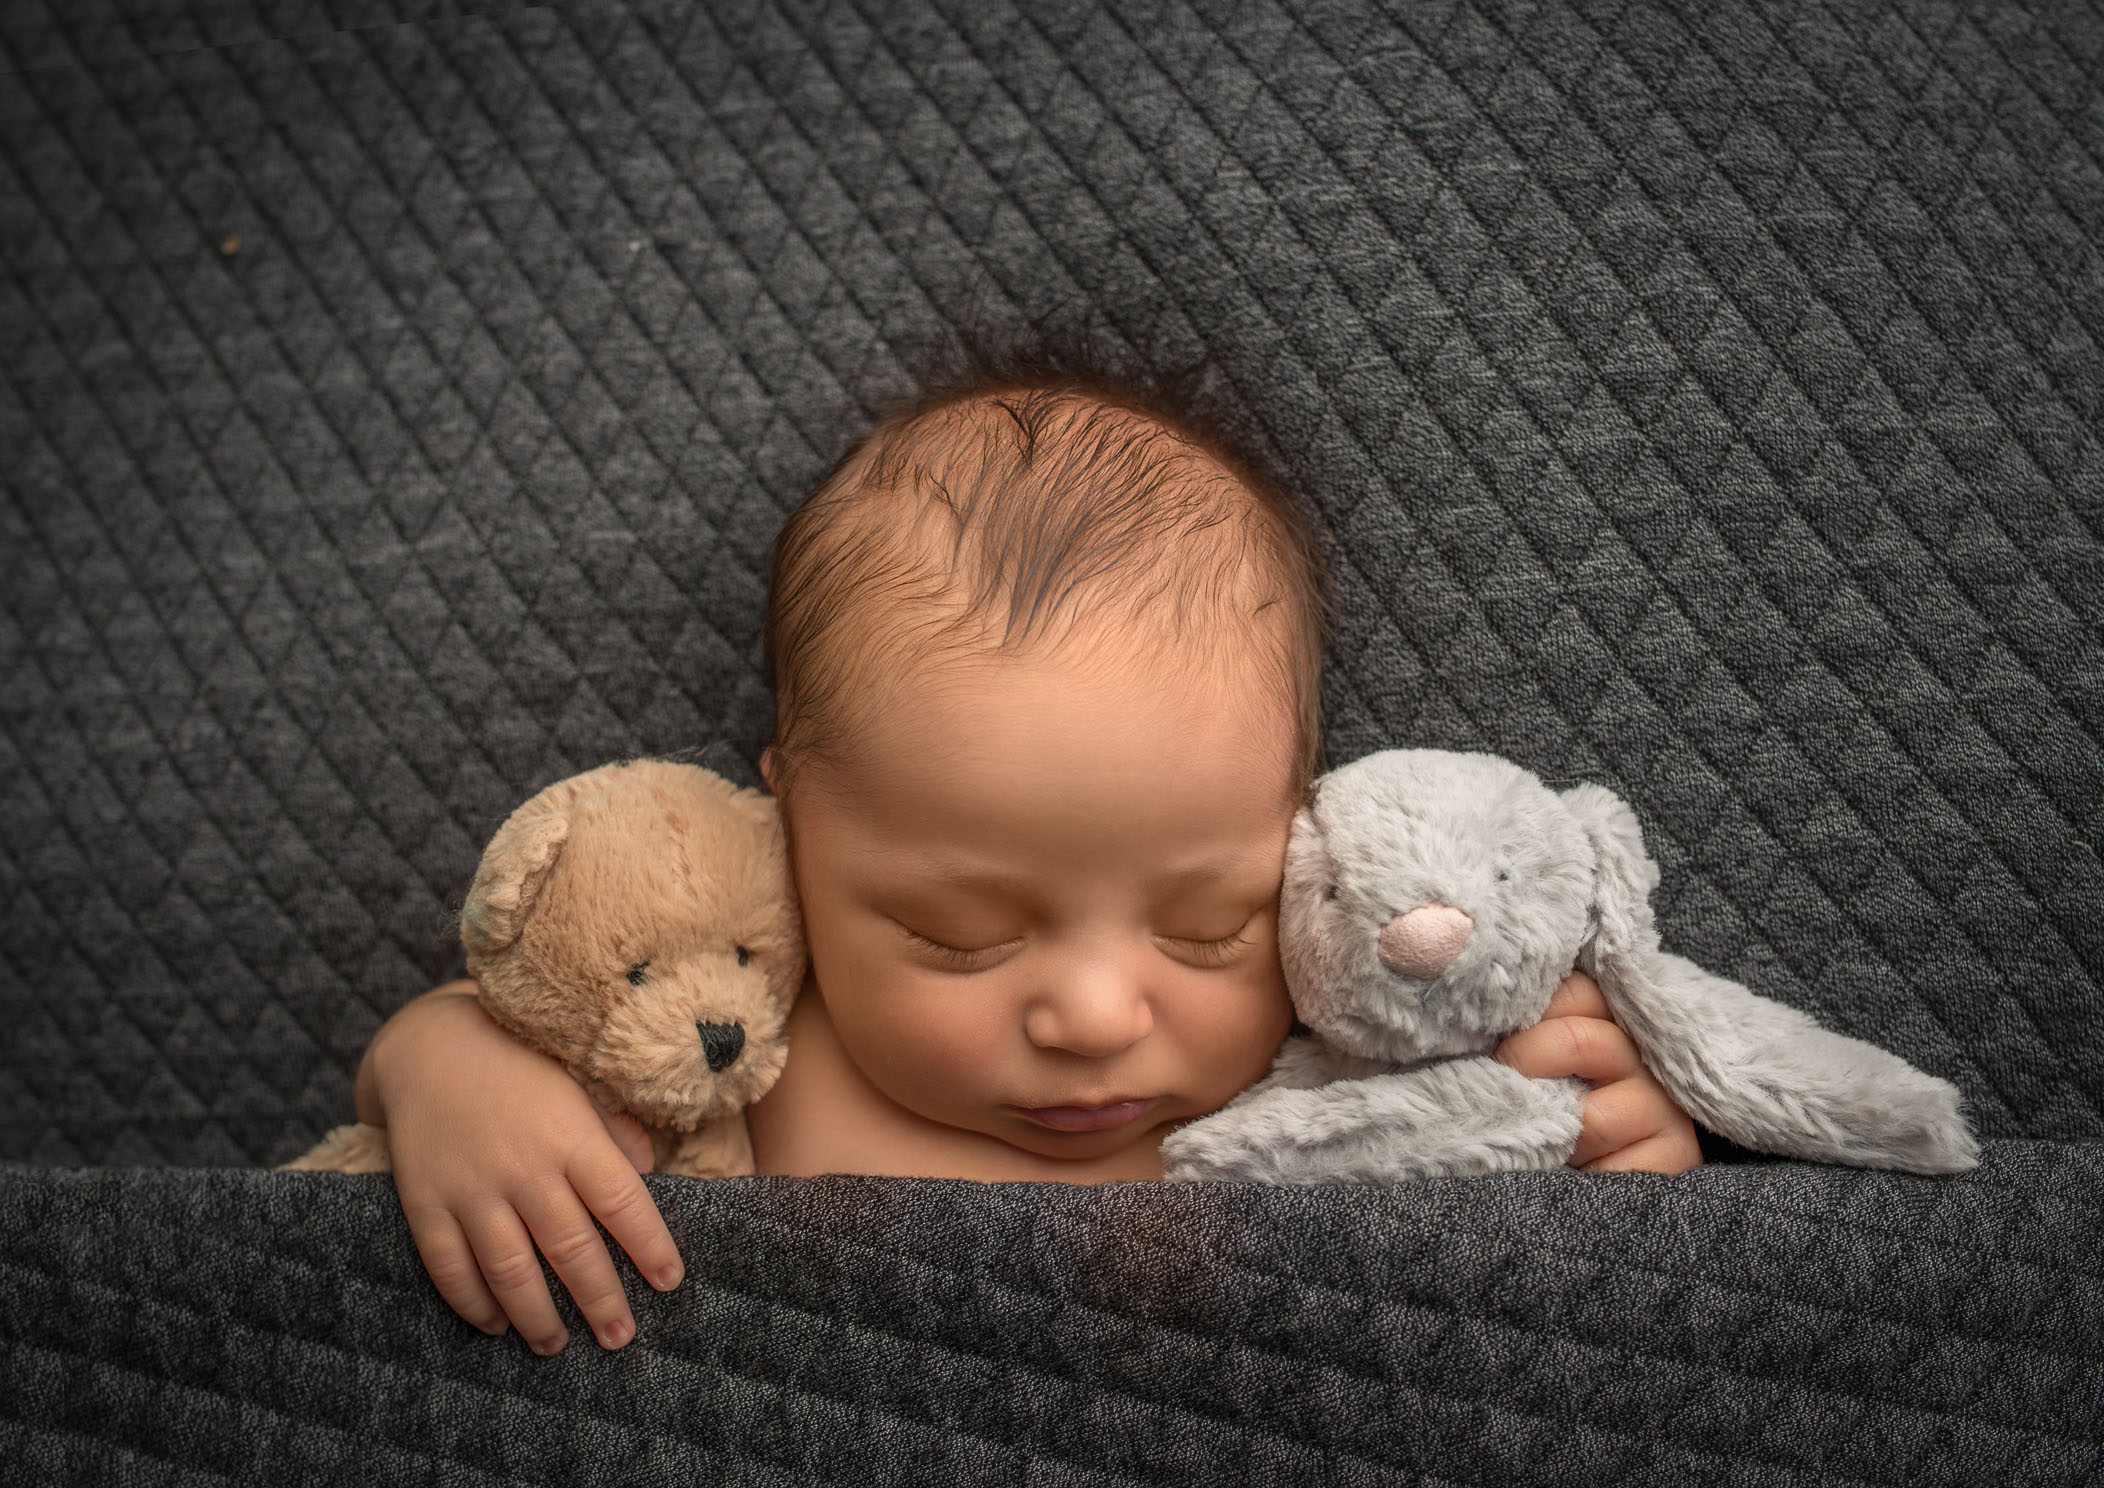 newborn baby sleeping tucked in with stuffed bear and rabbit